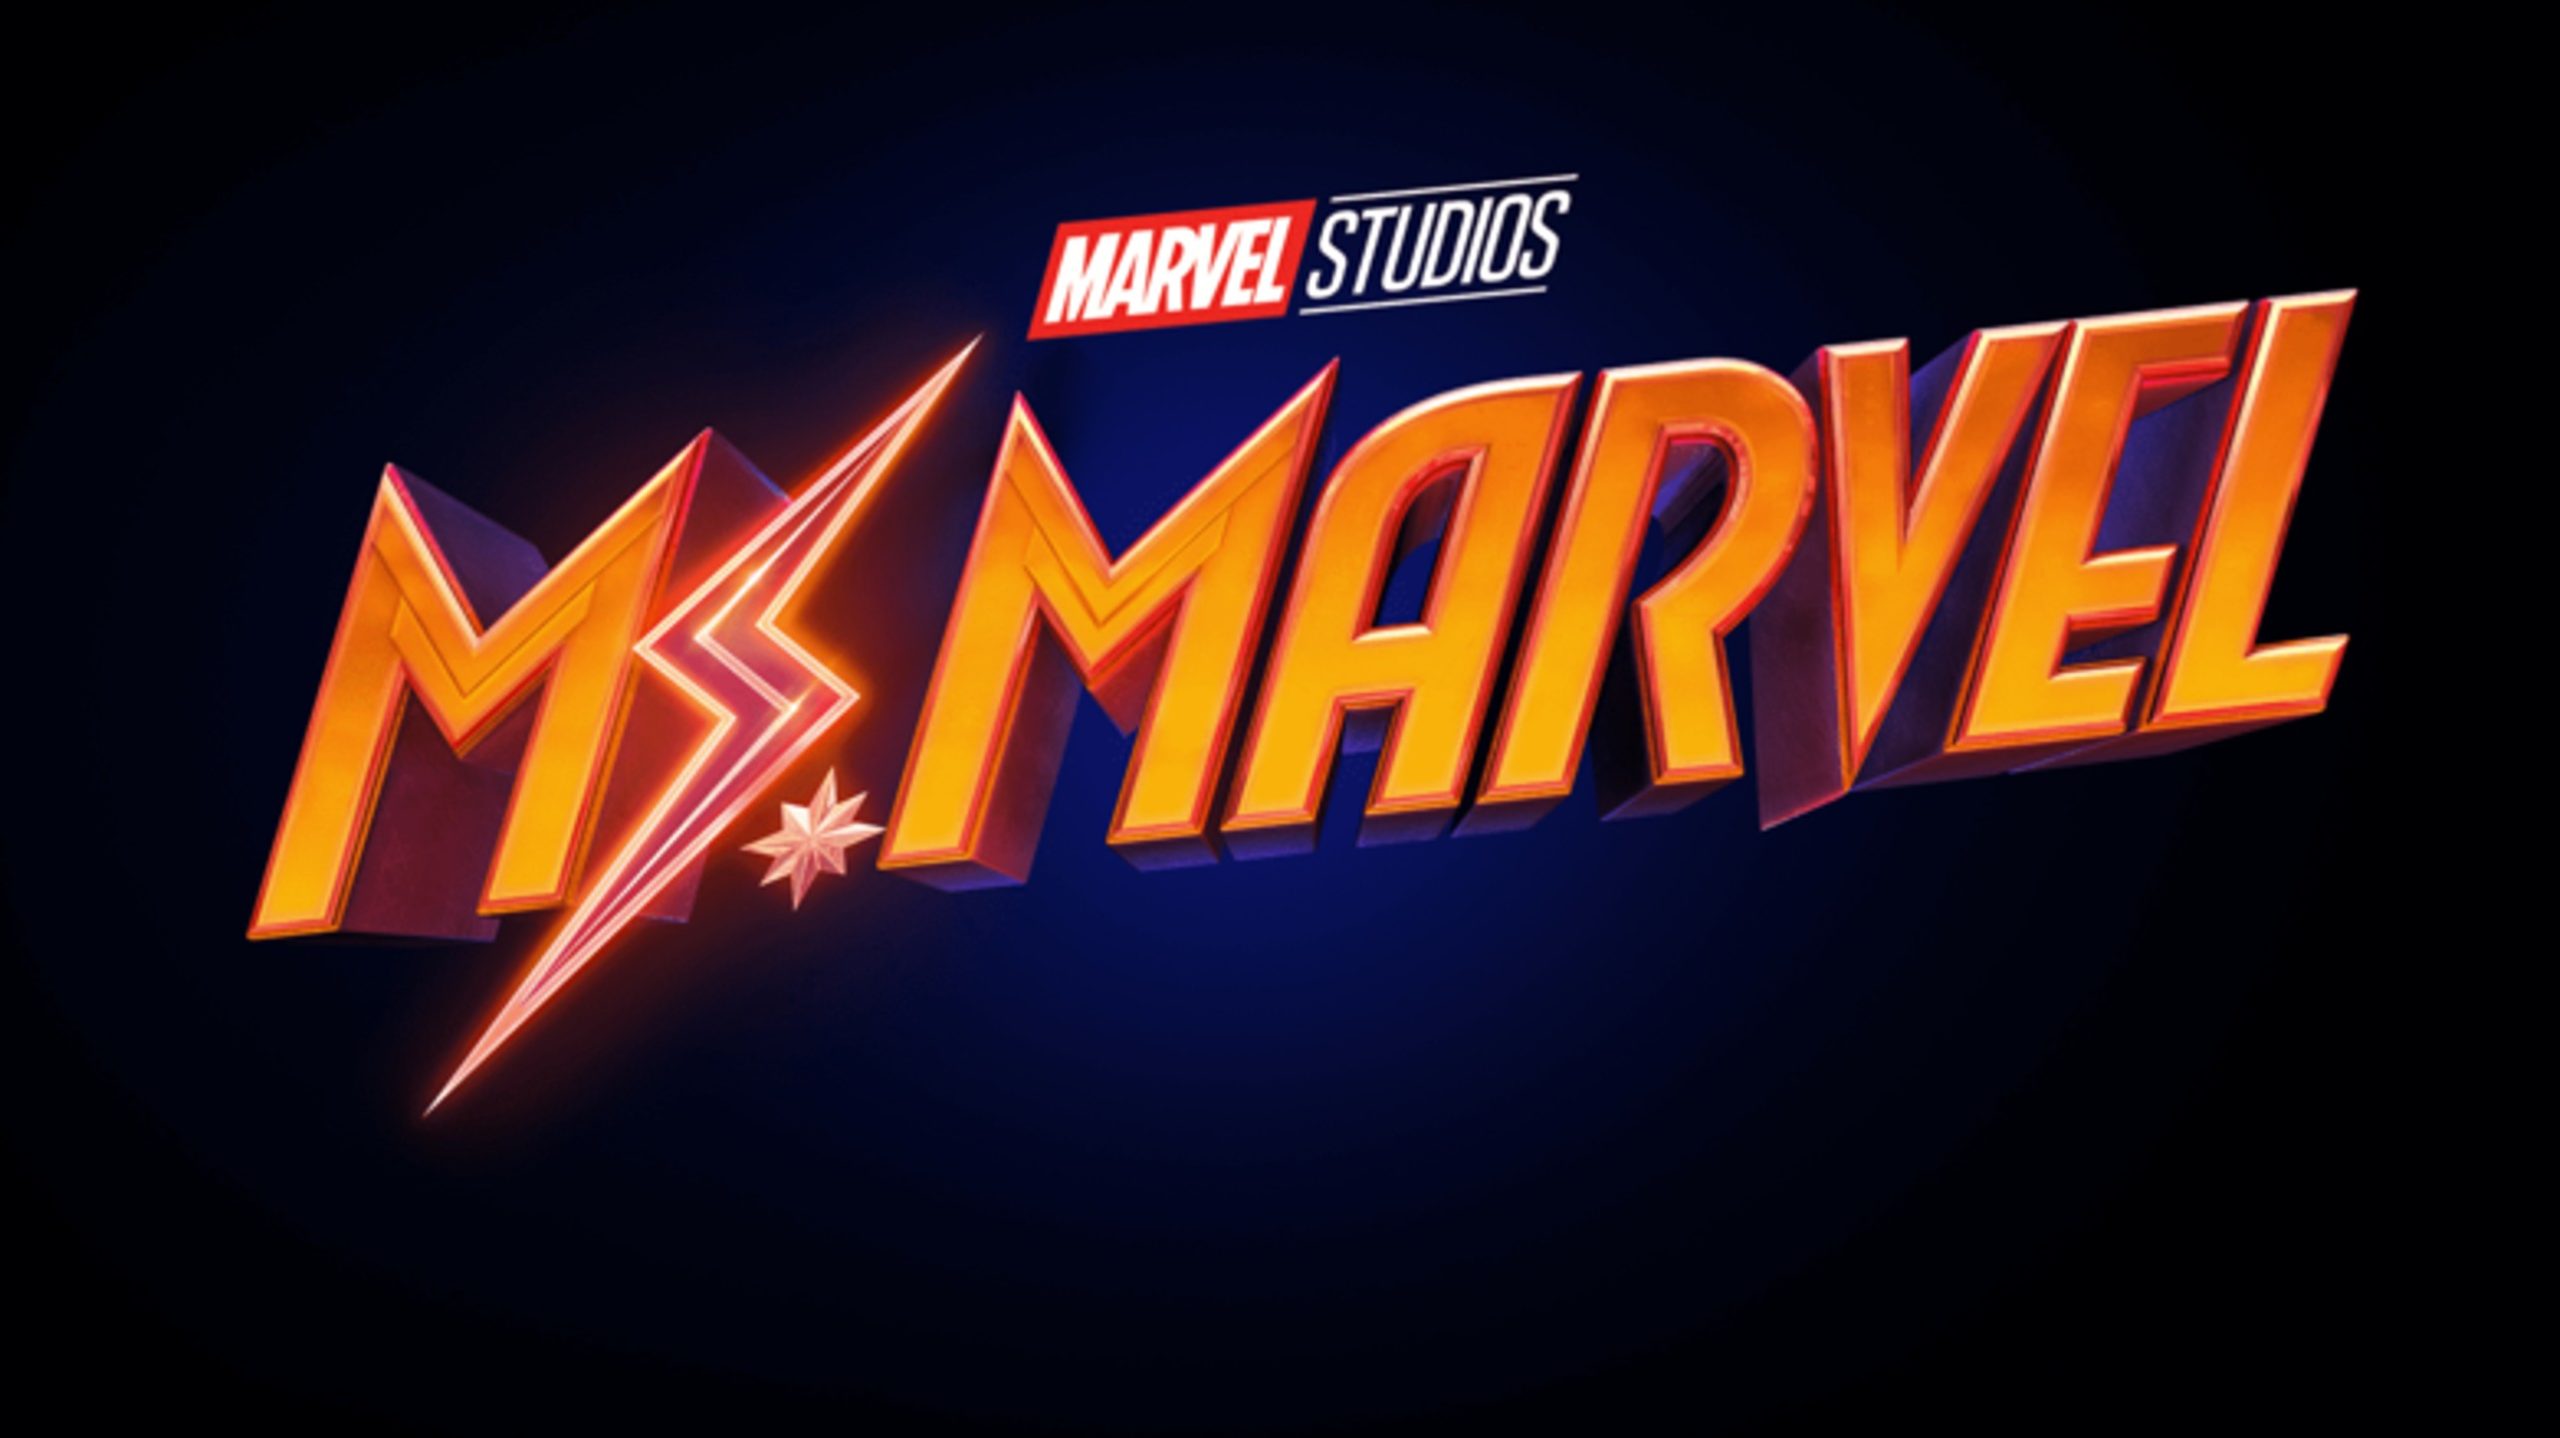 Ms. Marvel announcement Image